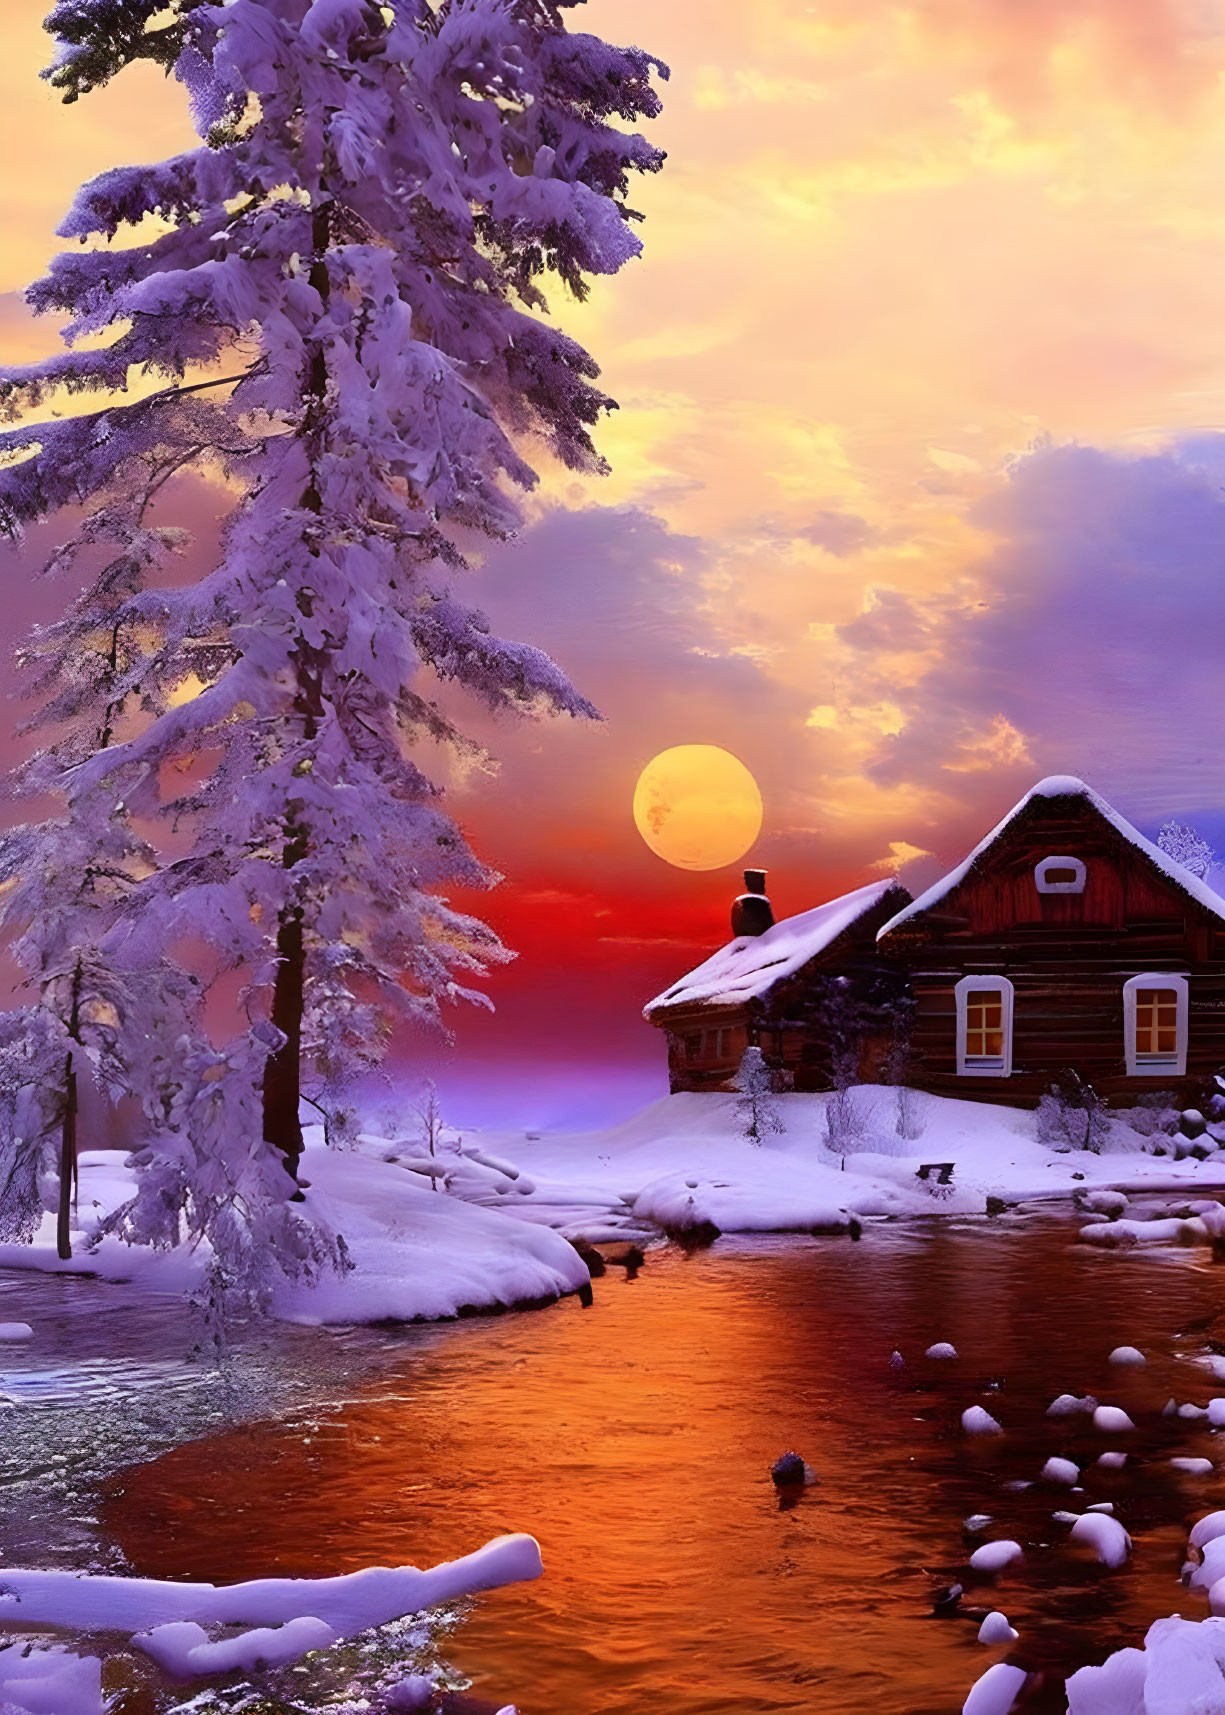 Snowy Sunset Landscape: Cabin, River, Snowy Trees, Full Moon